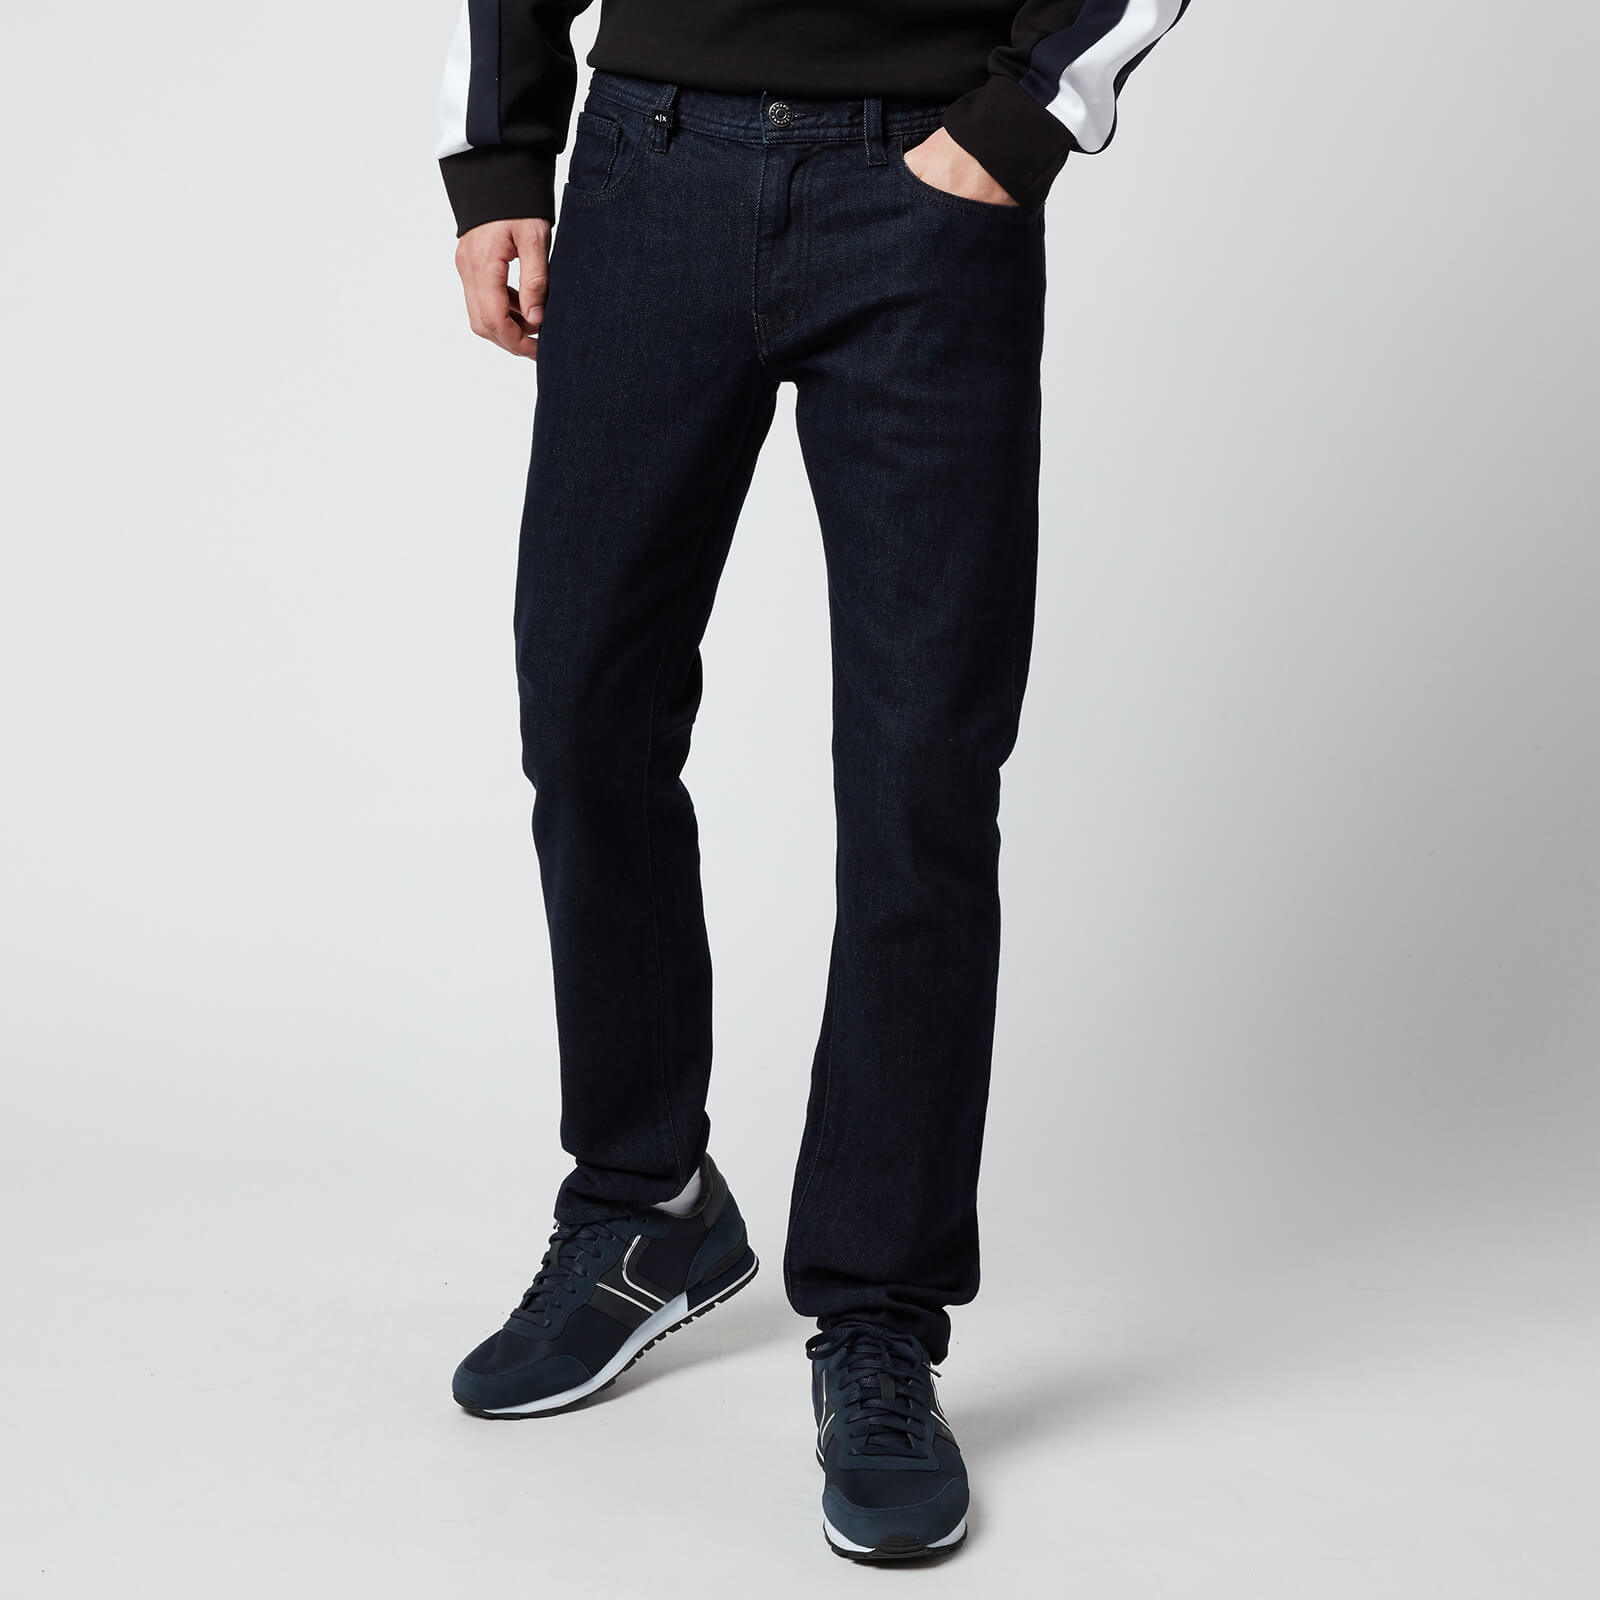 Armani Exchange Men's Slim Denim Jeans - Indigo - W30/L32